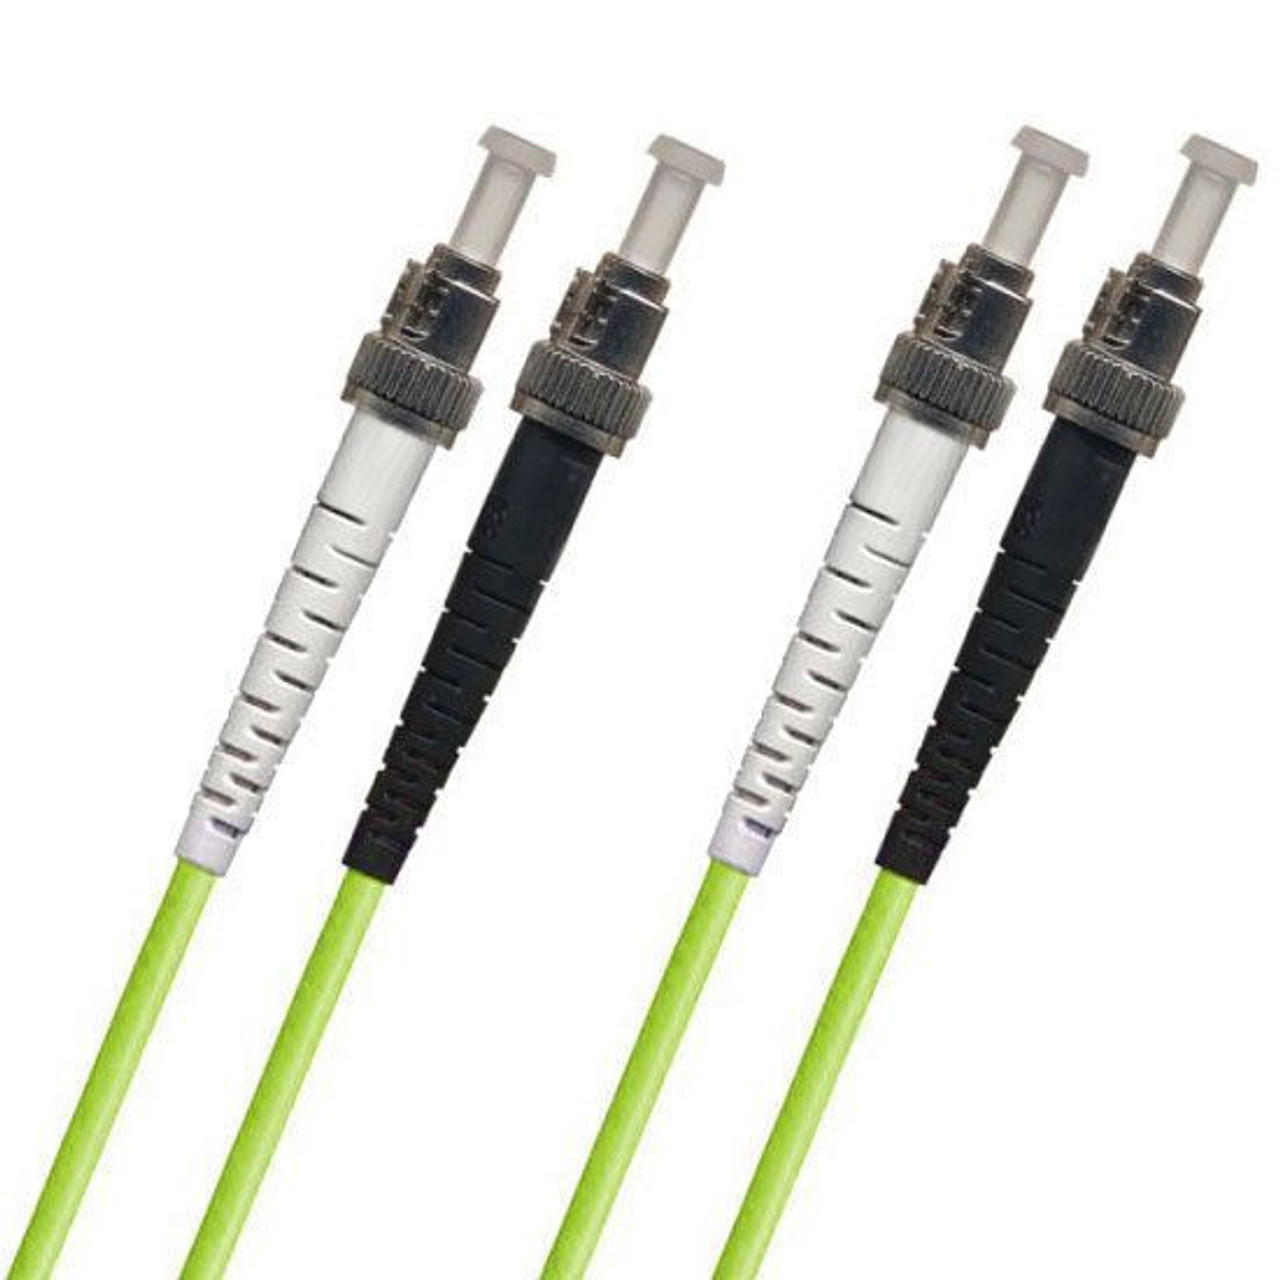 Fiber patch cables with ST connectors